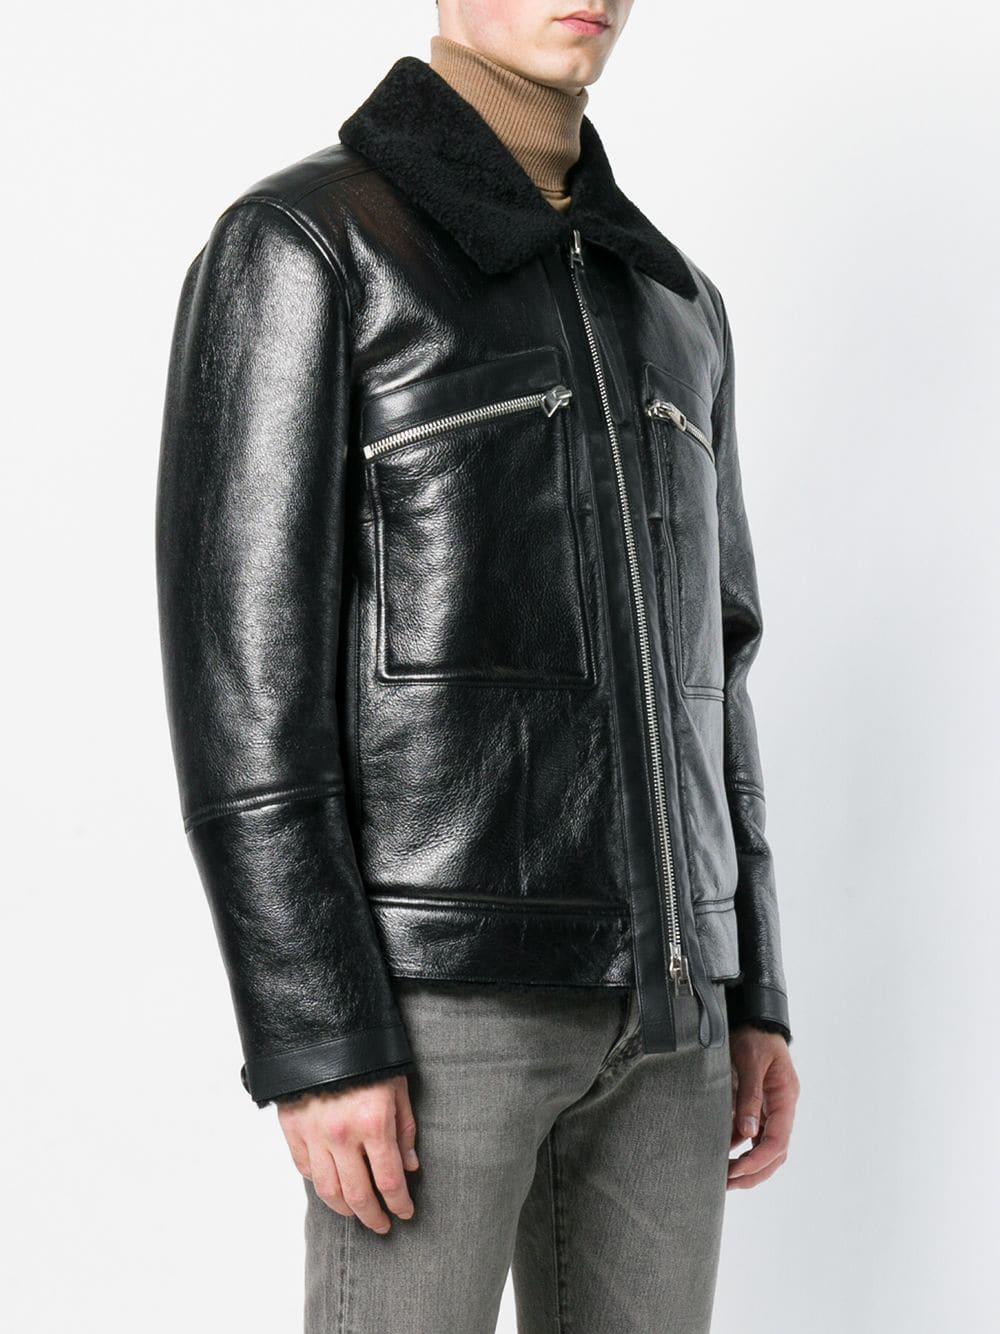 Tom Ford Leather Jacket Wholesale Prices, Save 41% | jlcatj.gob.mx